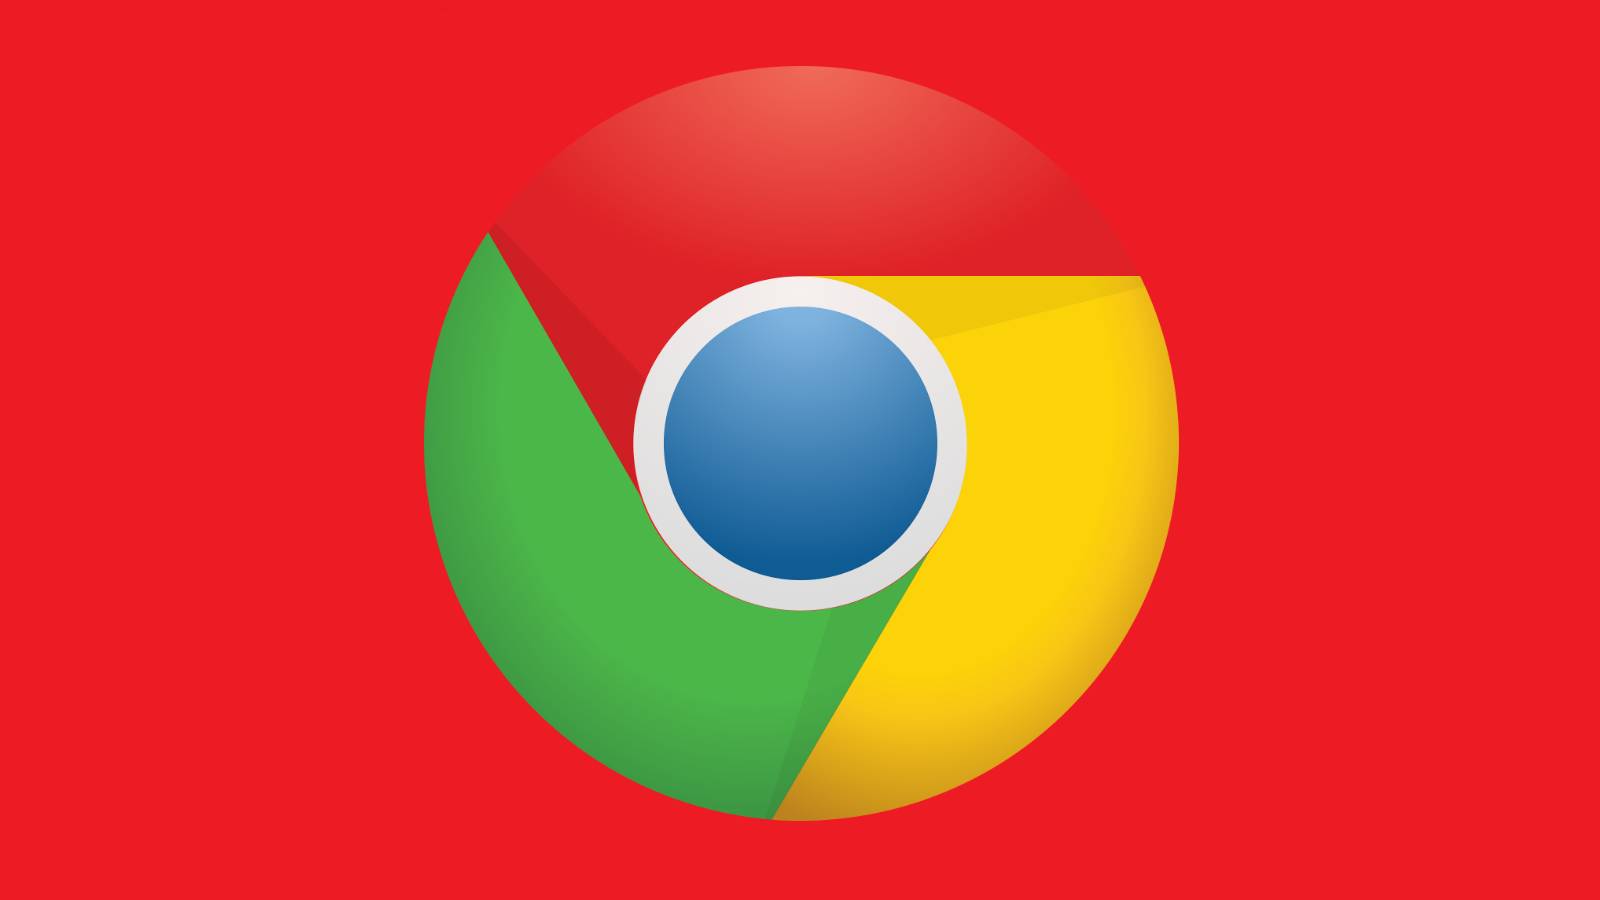 Google Schimbari URIASE Google Chrome Toata Lumea